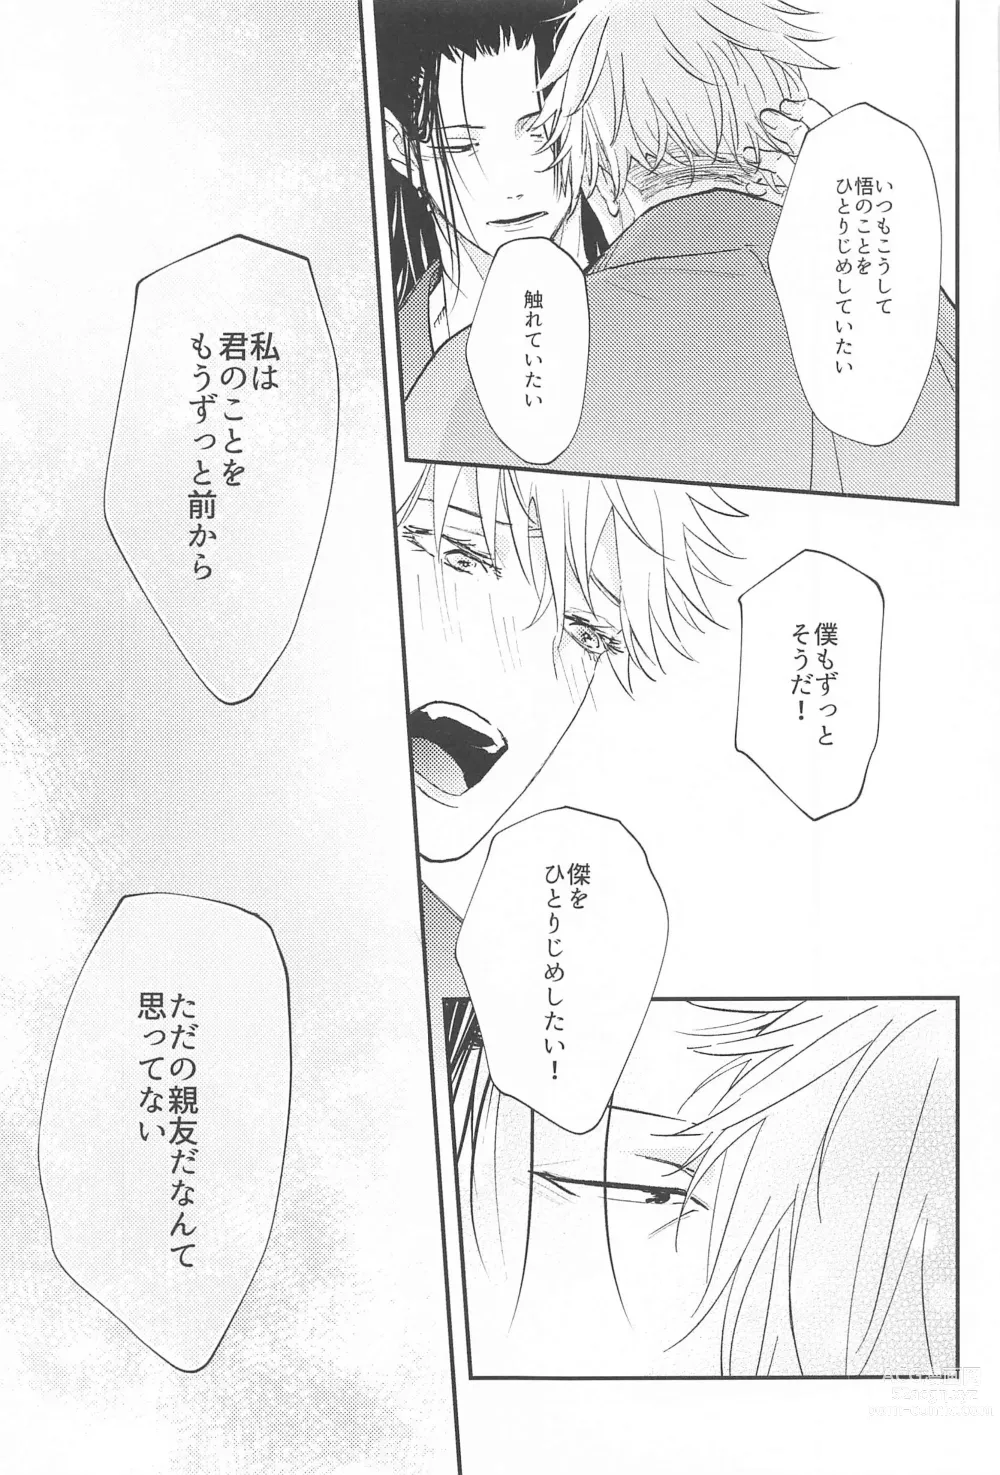 Page 26 of doujinshi Kojirase Blue to Koi Wazurai 2